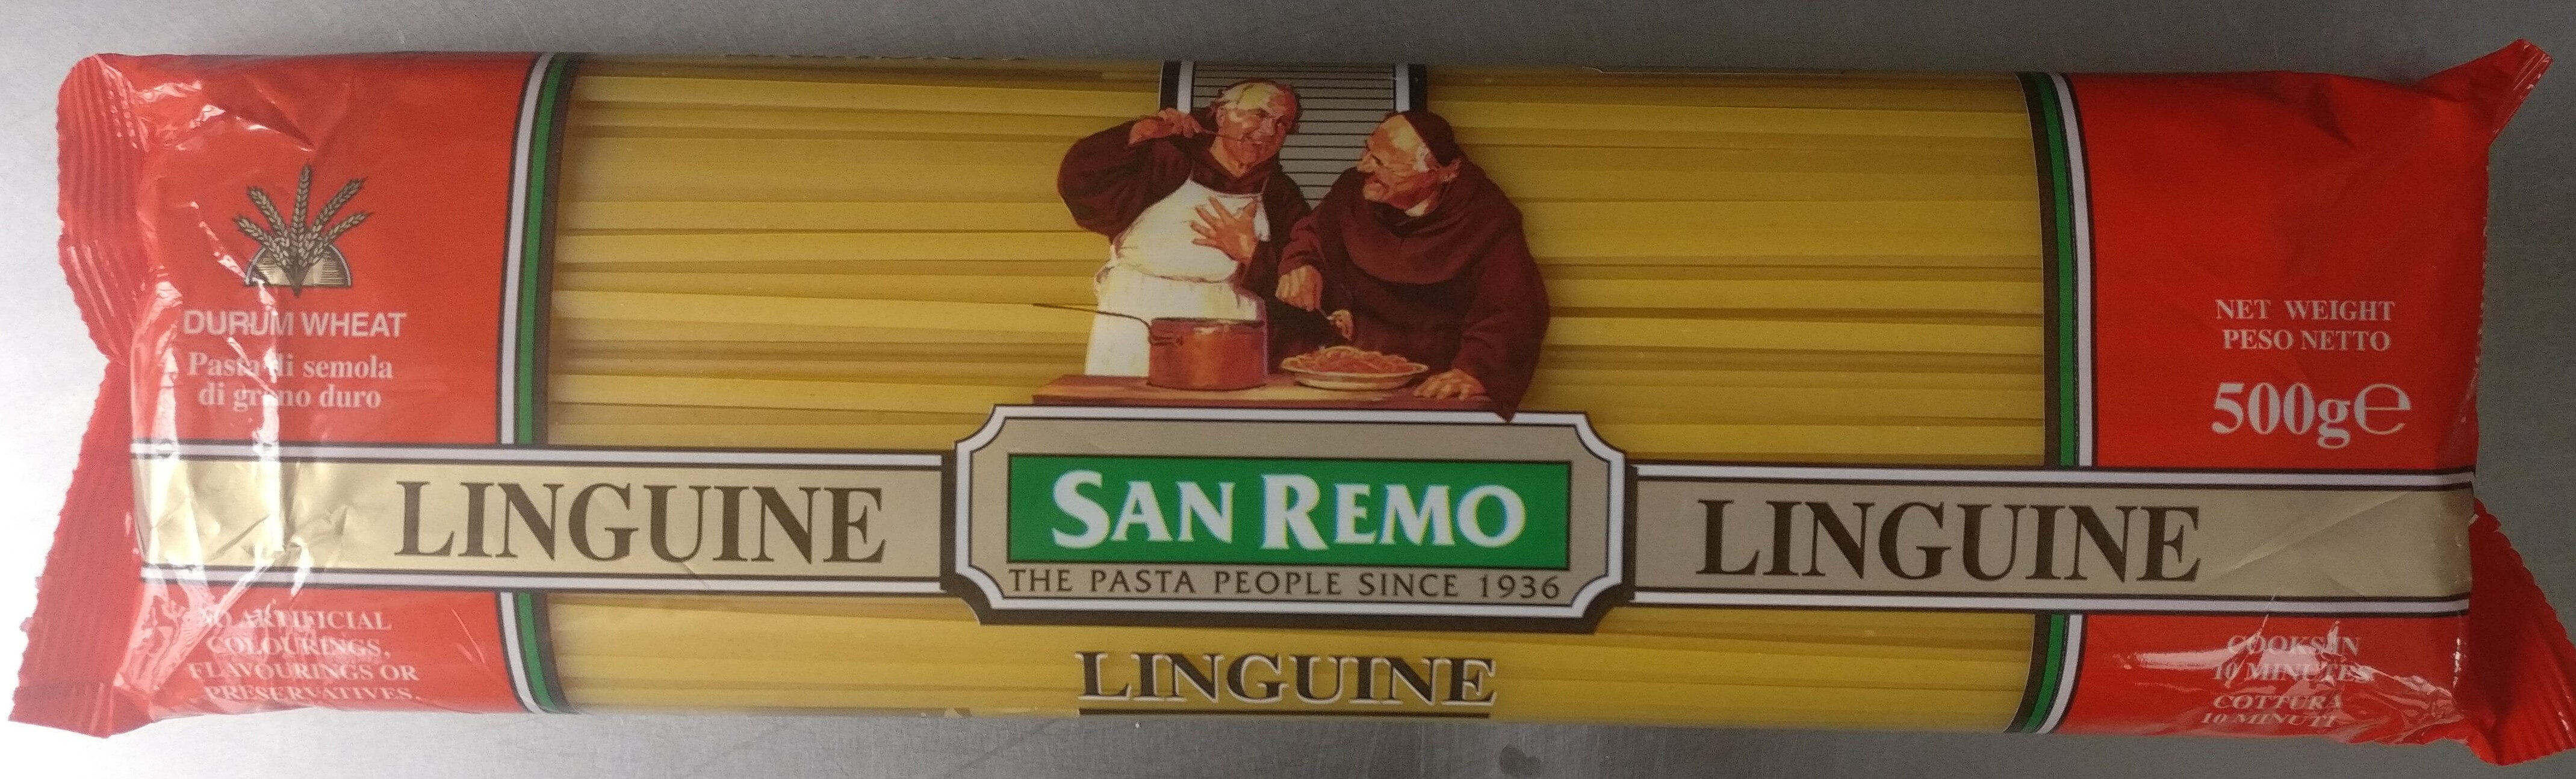 San remo Linguine No. 1 500g - Product